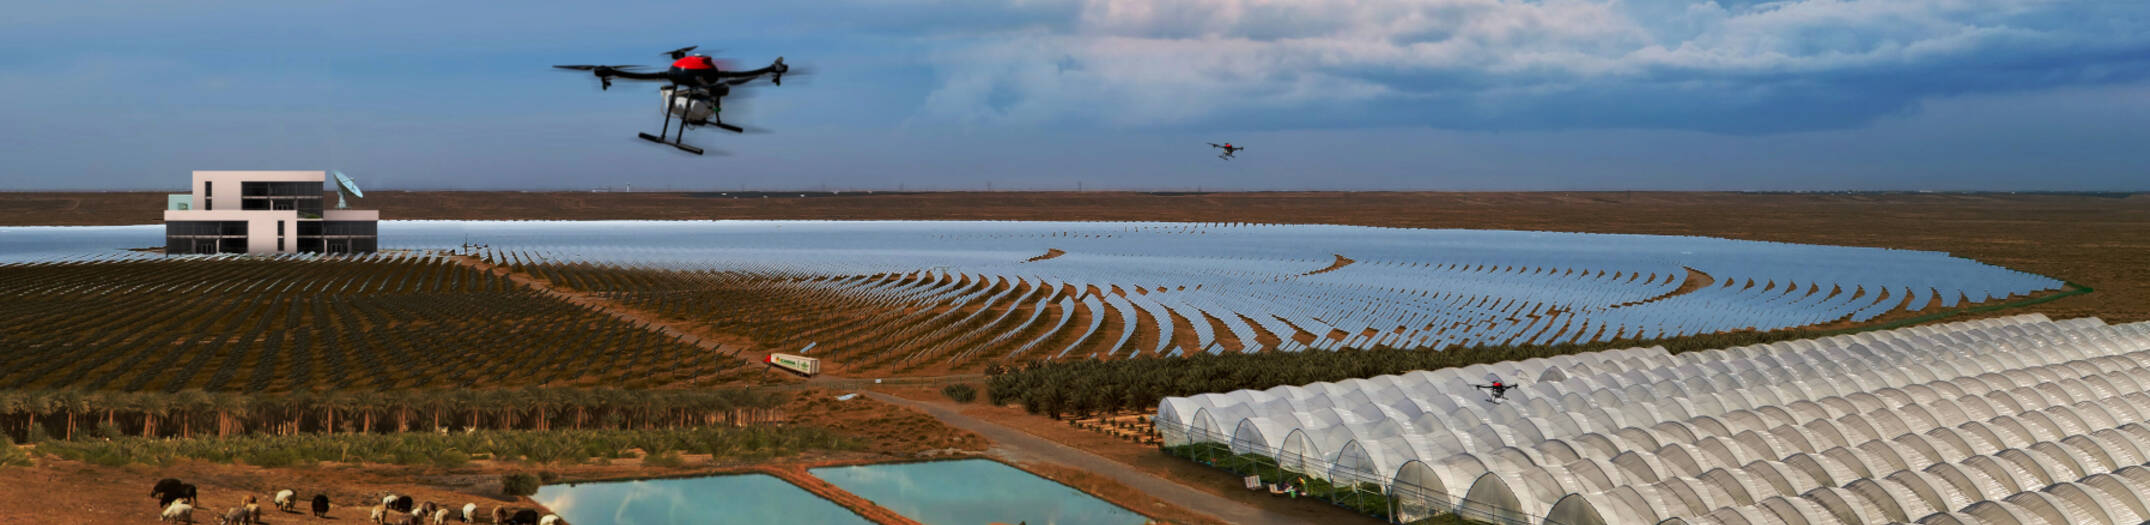 Integrated Desert Farming Technology